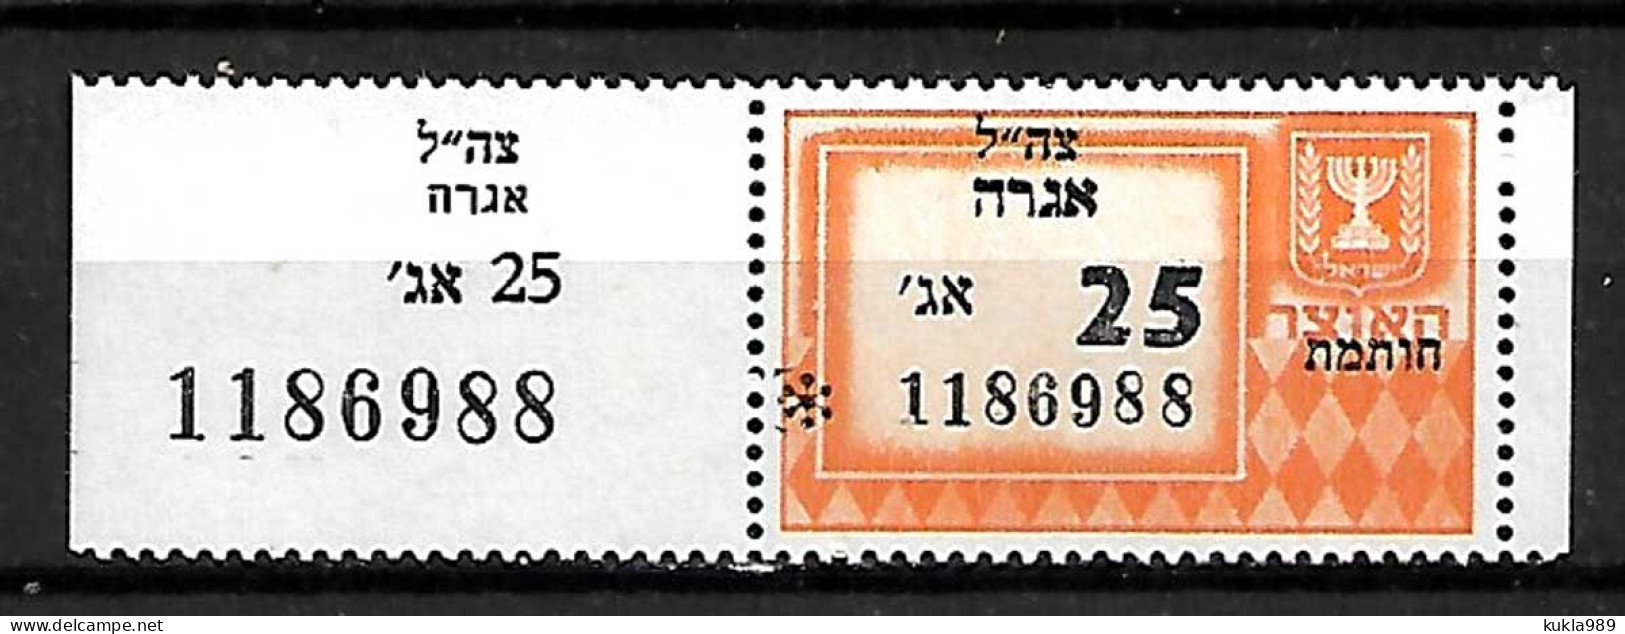 ISRAEL, AGRA REVENUE STAMP MILITARY ADMIN. FOR GAZA STRIP & SINAI, 1975, 25Ag., TAB, MNH - Ungebraucht (mit Tabs)